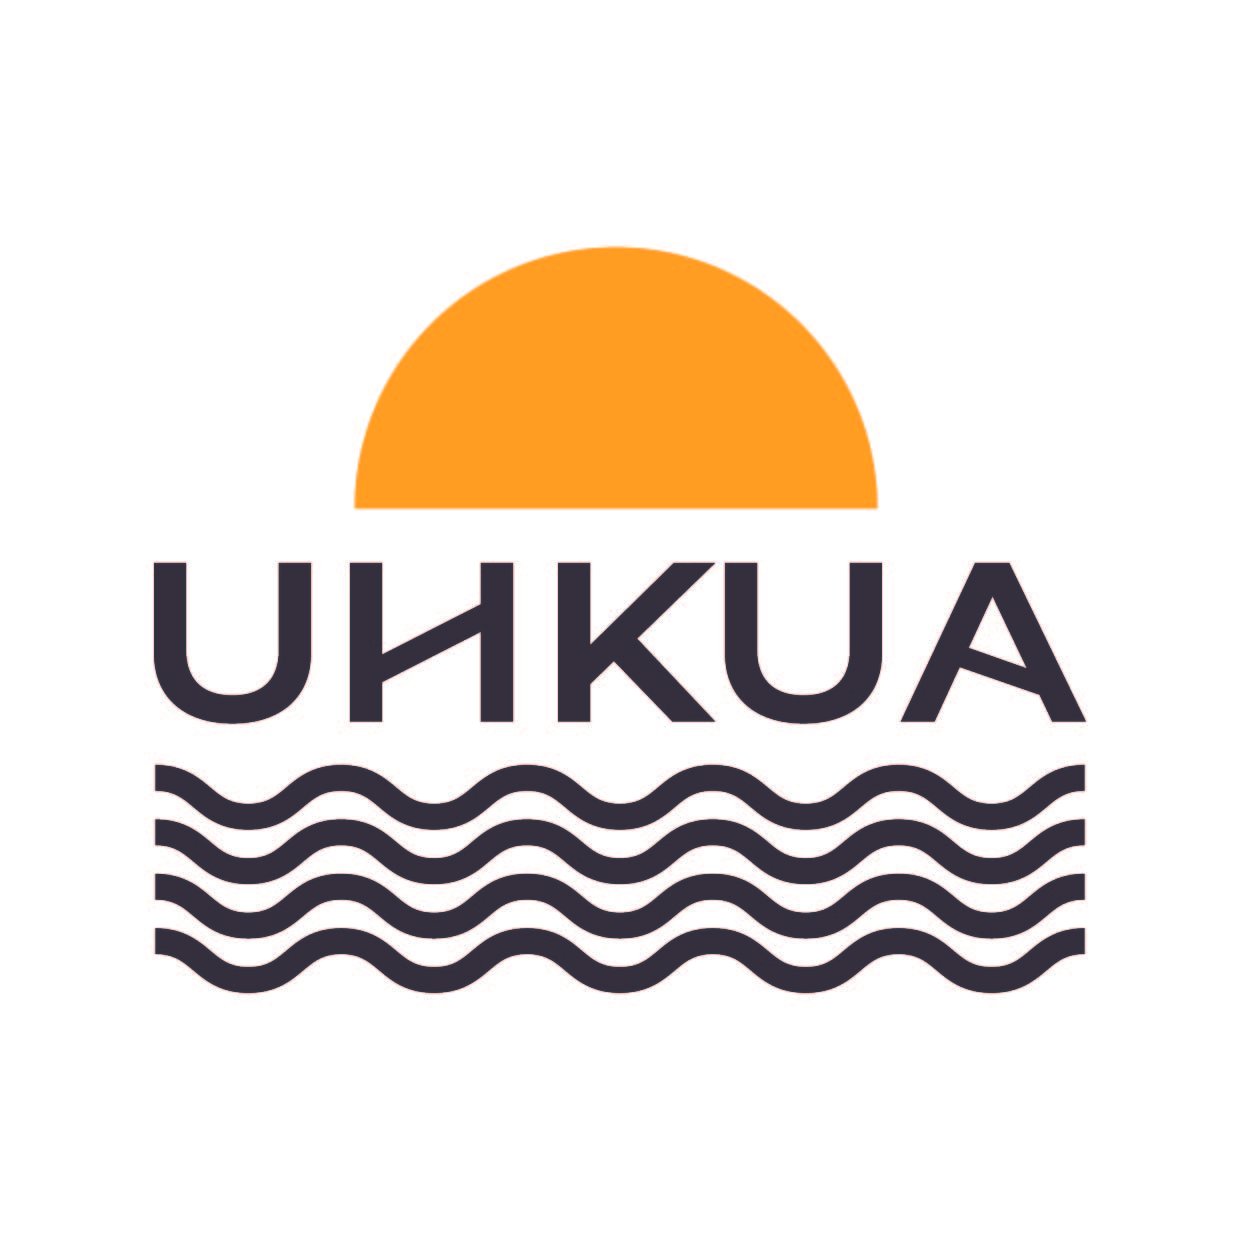 Uhkua logo square.jpg